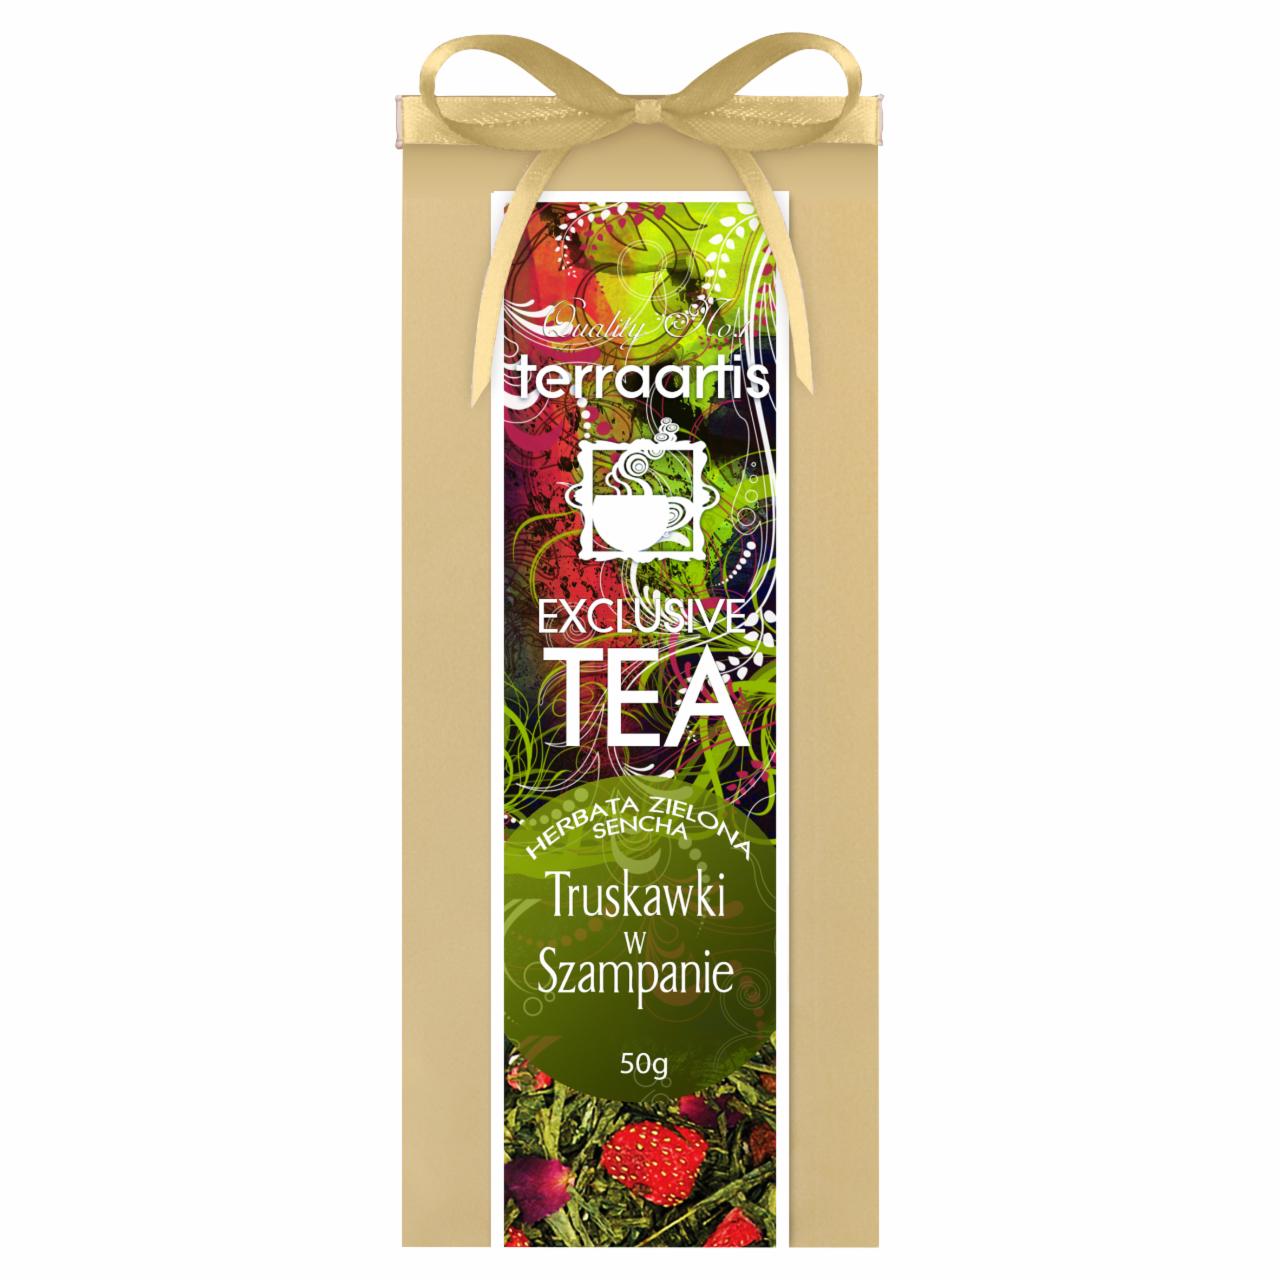 Zdjęcia - Terraartis Exclusive Tea Herbata zielona Sencha truskawki w szampanie 50 g